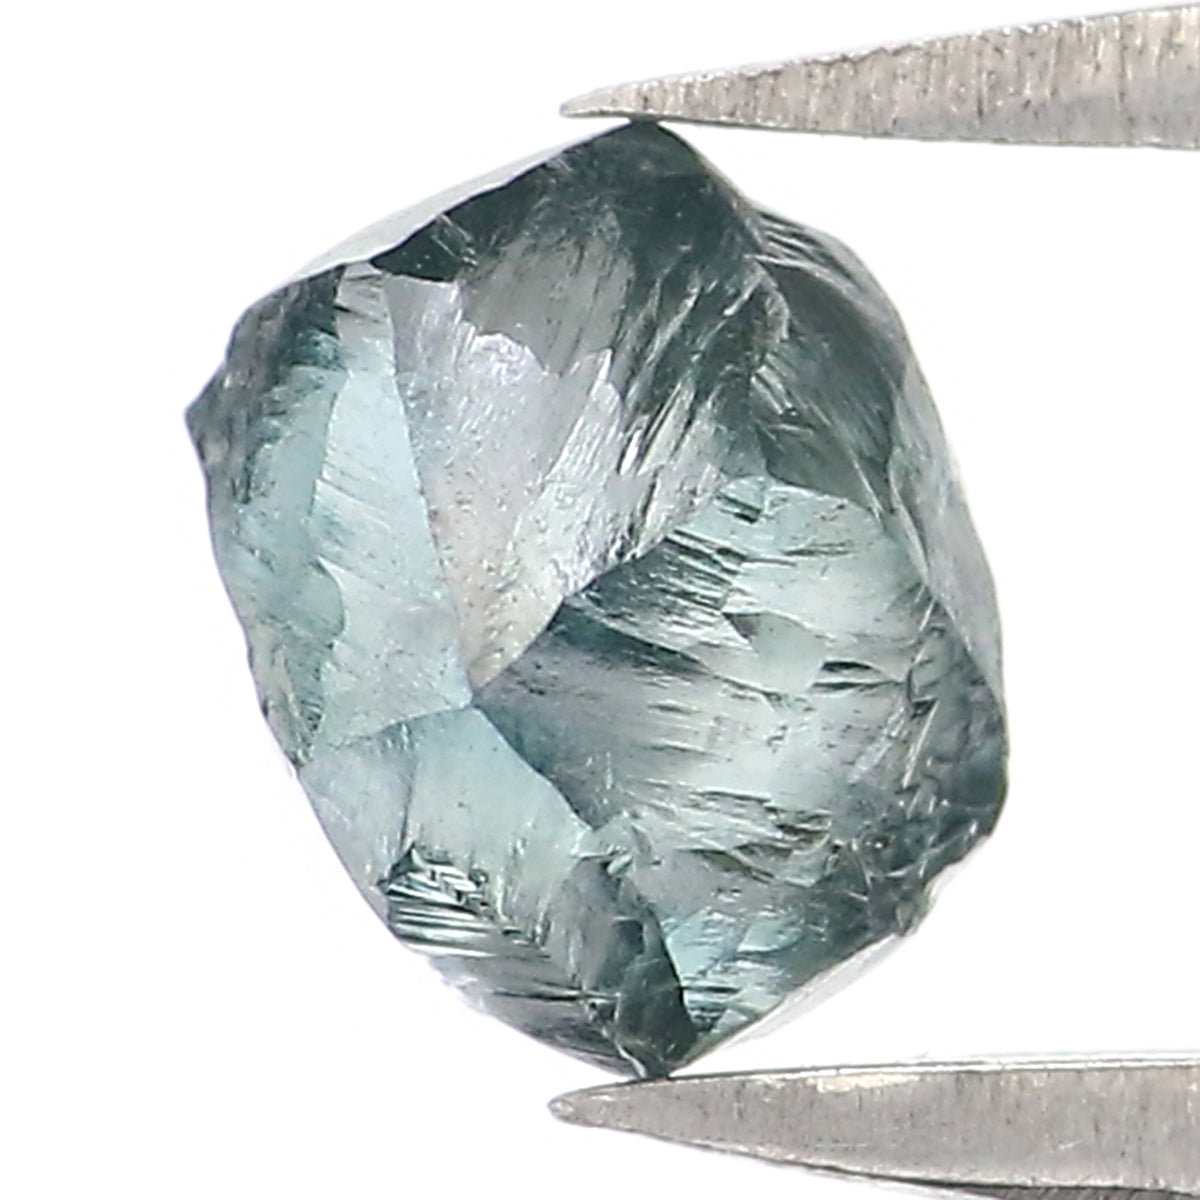 0.97 CT Natural Loose Rough Shape Diamond Blue Color Rough Cut Diamond 5.65 MM Natural Loose Blue Diamond Rough Irregular Cut Diamond QL2347